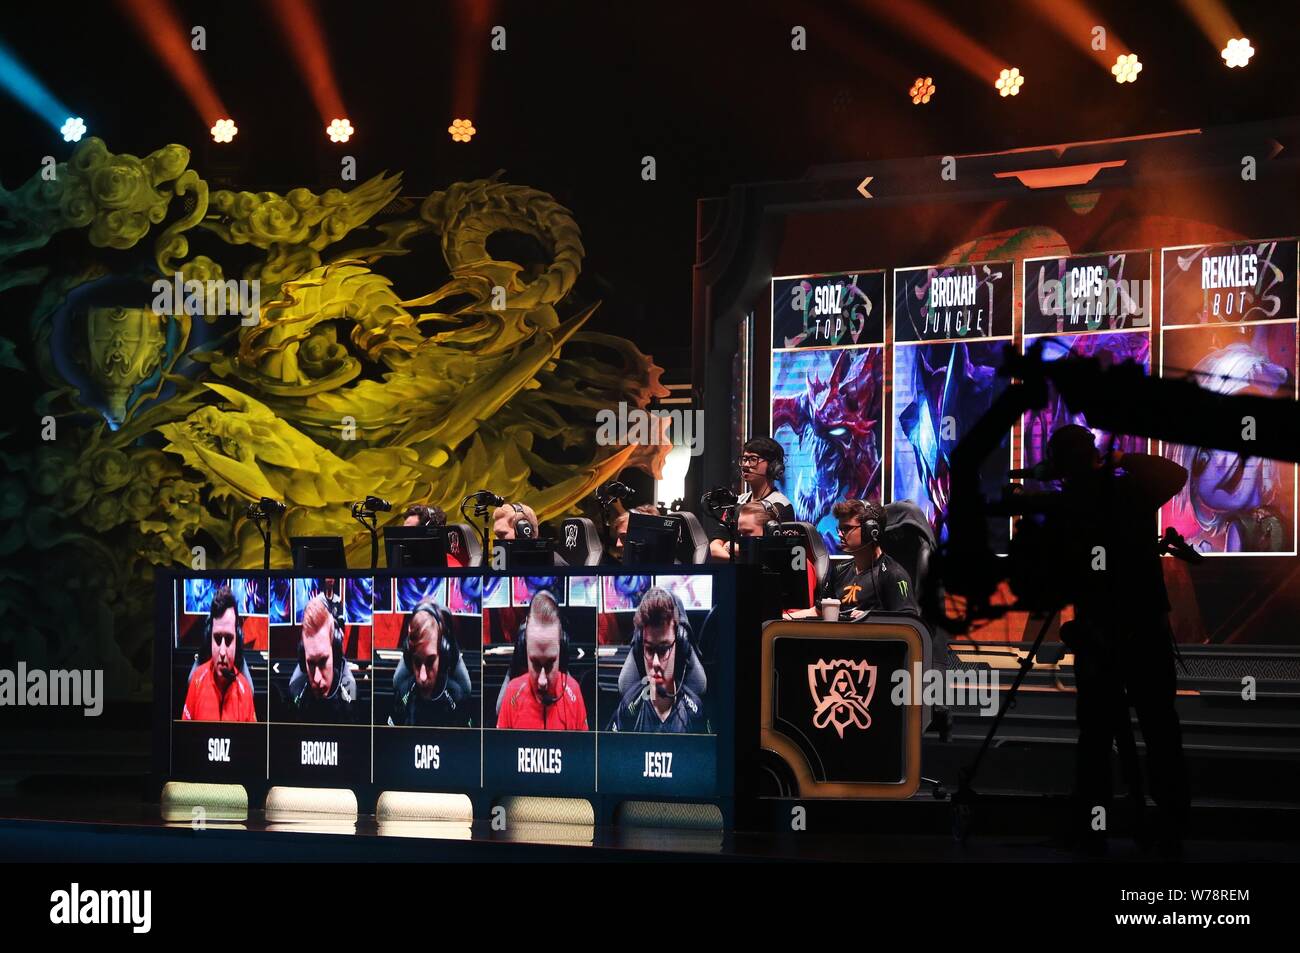 League of Legends World Championship 2019: live stream details